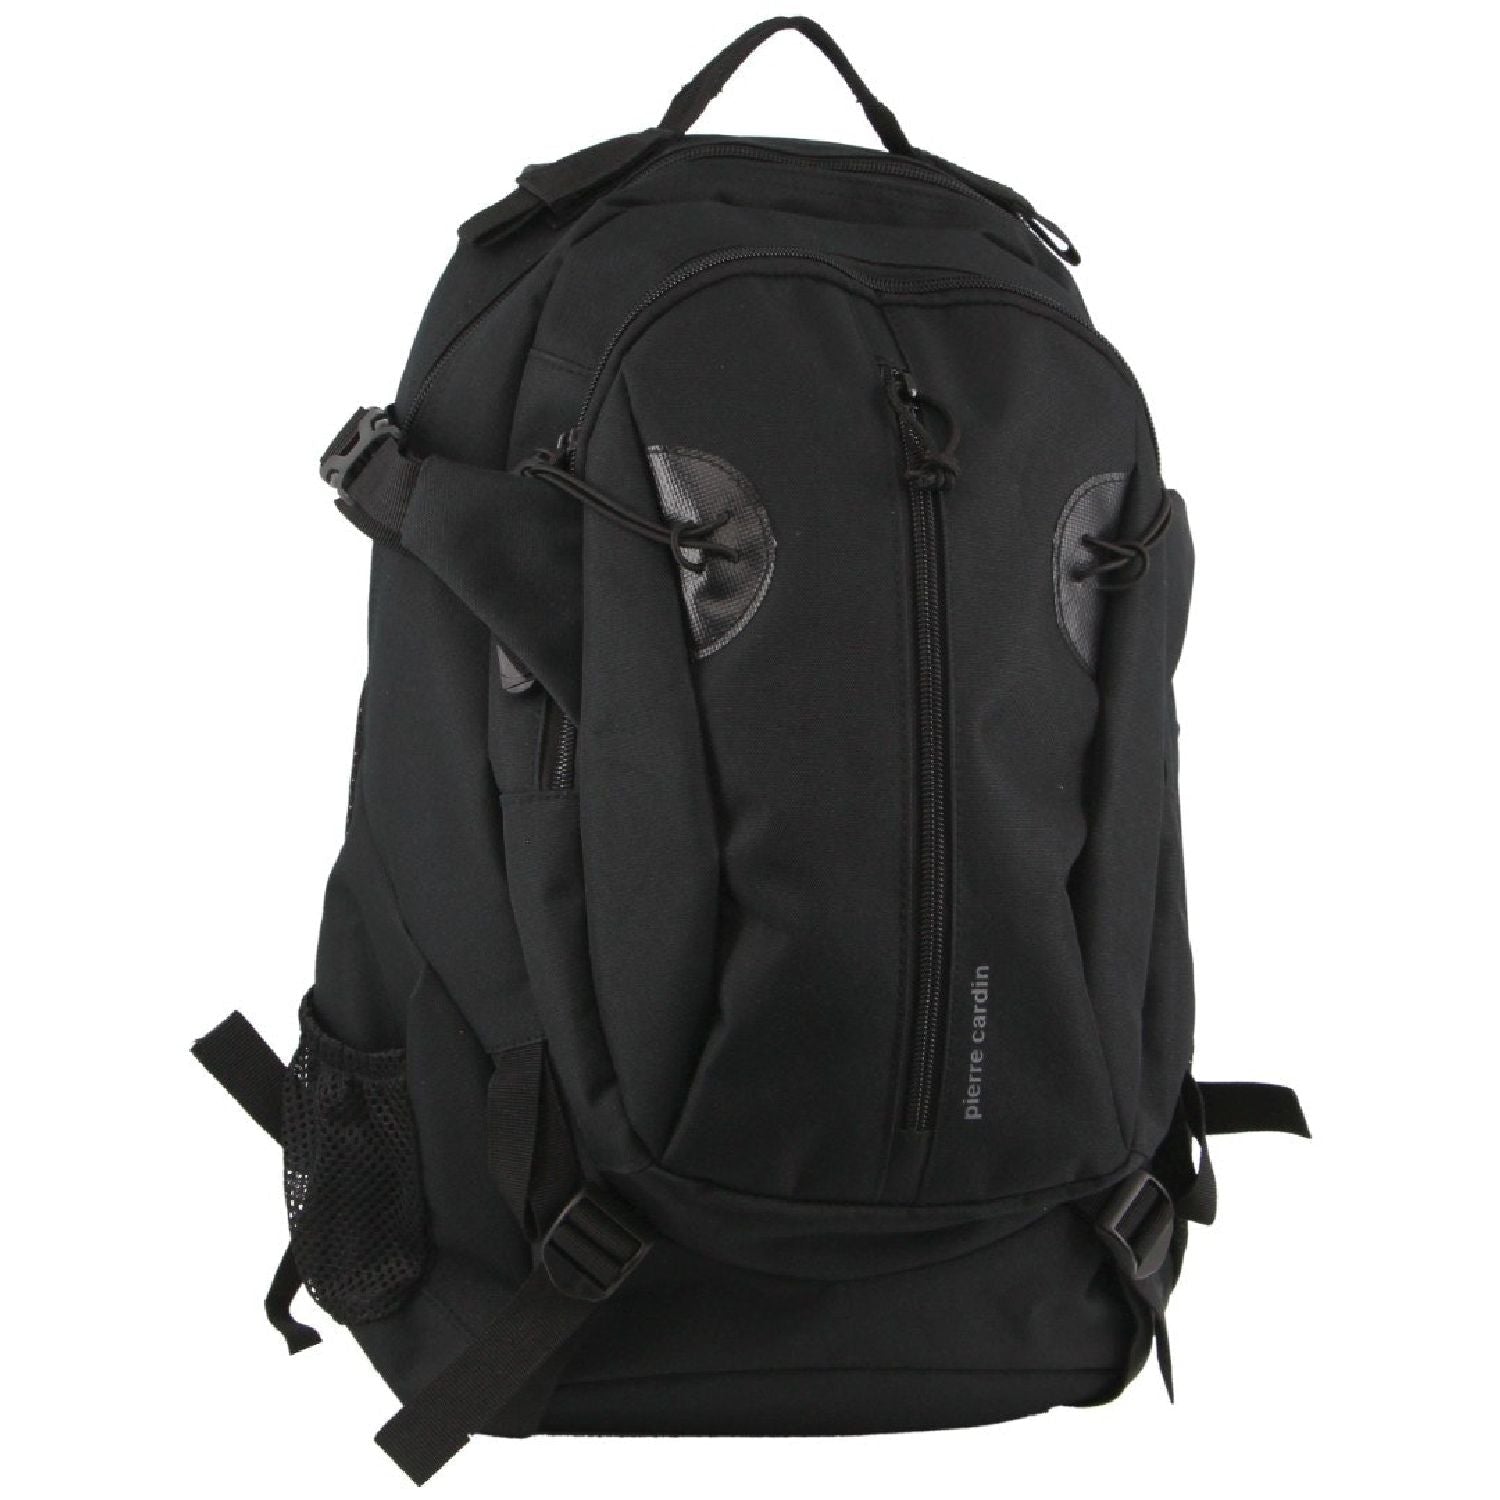 Pierre Cardin Adventure Backpack - Black